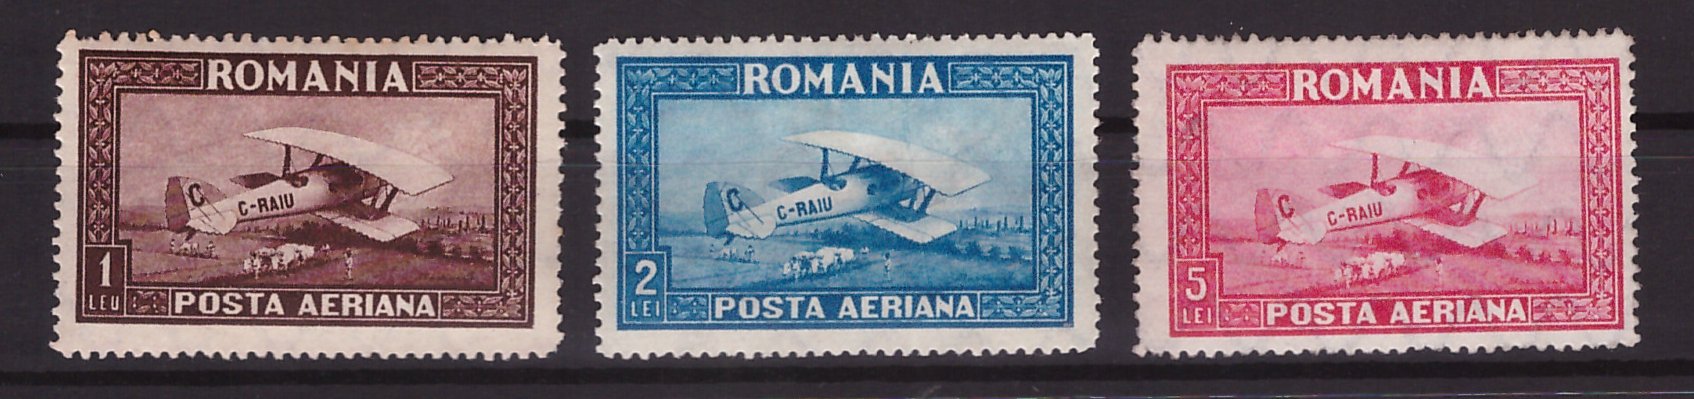 1928 - Posta Aeriana C-RAIU fil.orizontal serie nestampilata